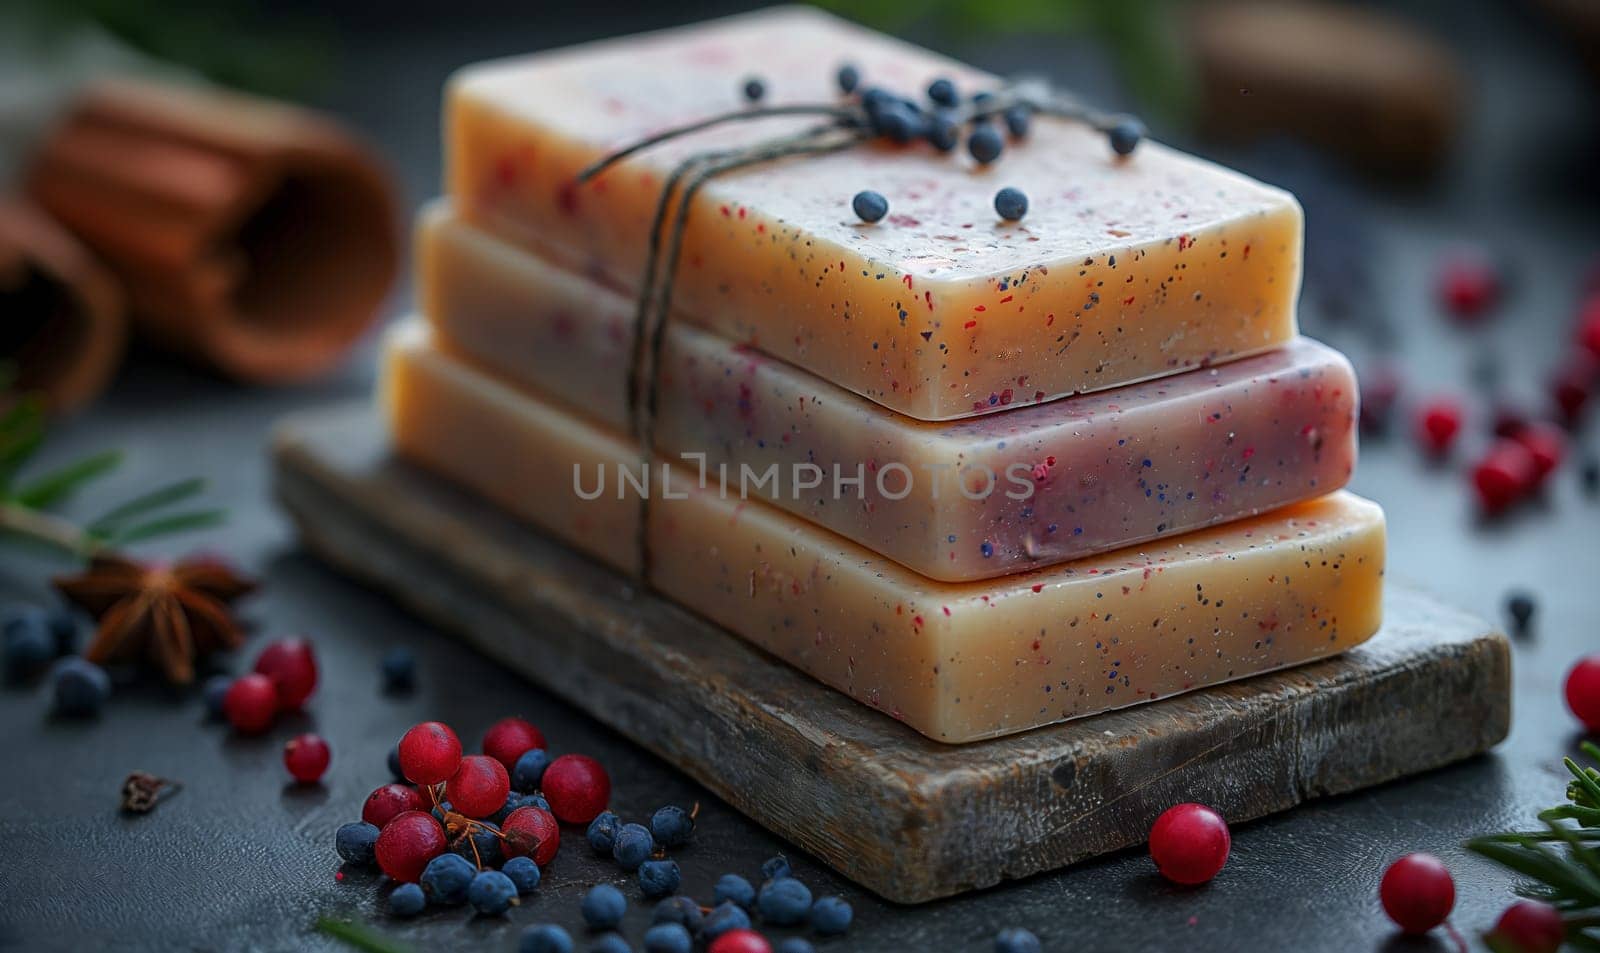 Handmade soap as a gift. by Fischeron